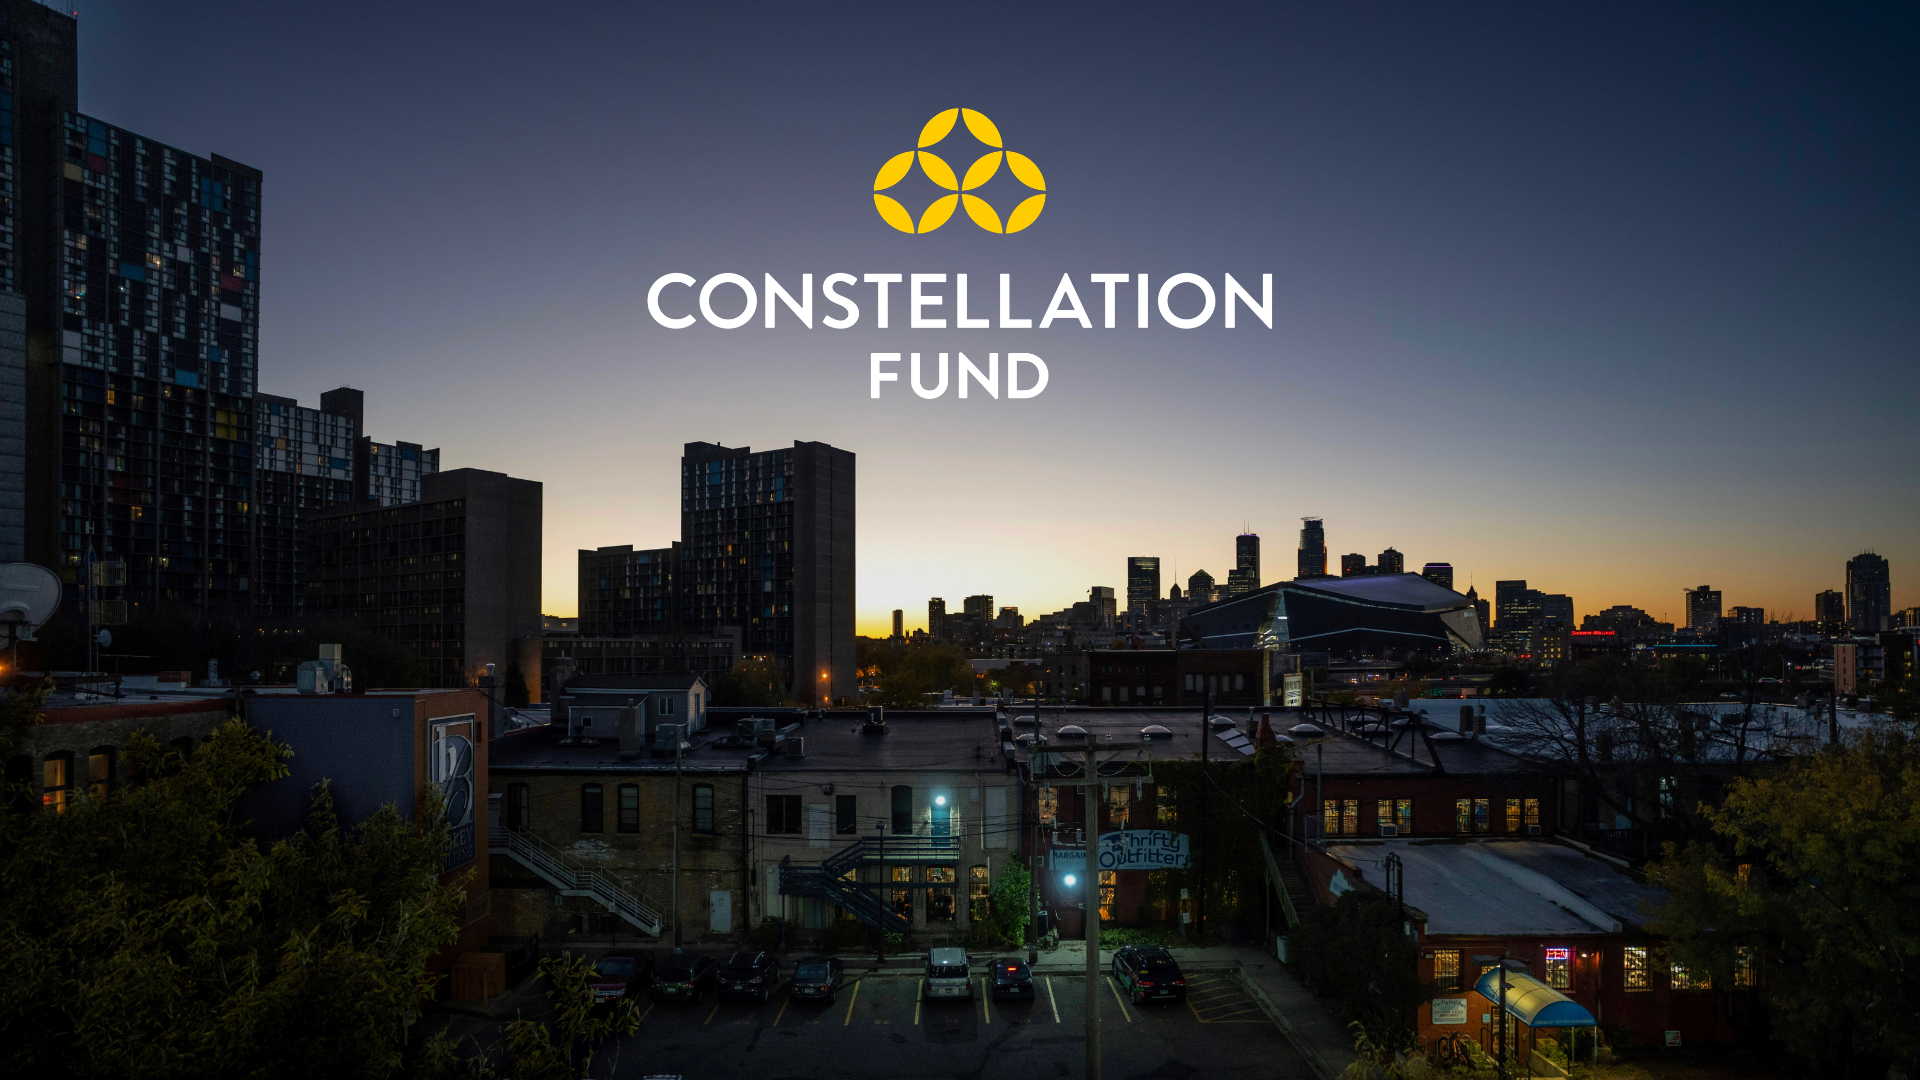 Constellation Fund Grant Information Session